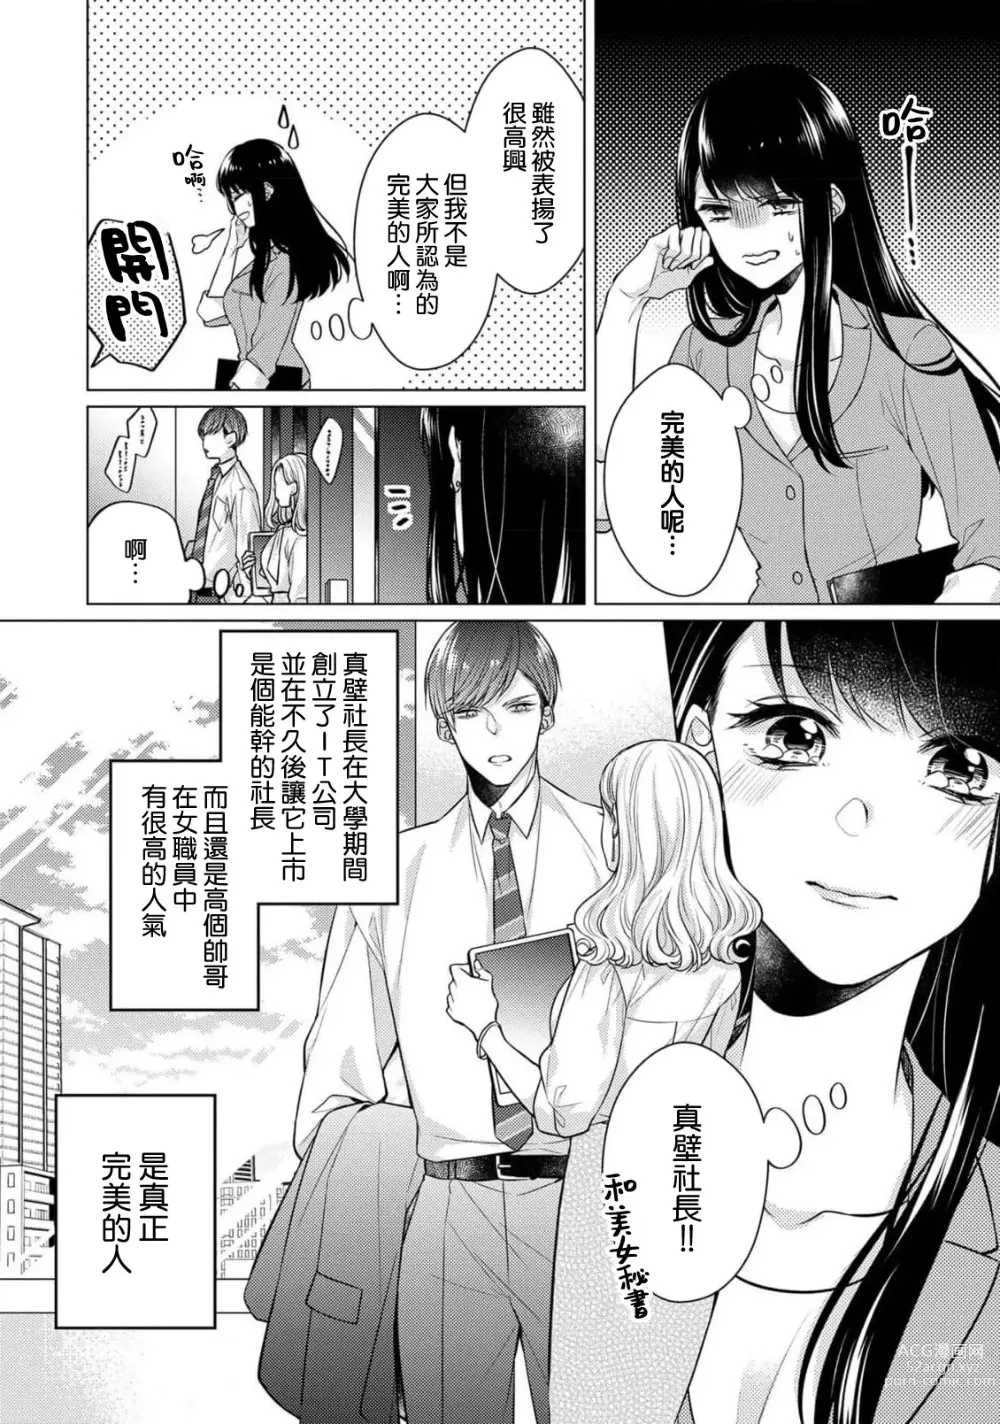 Page 5 of manga 宠爱王子和处女少女~30岁还是处女，这一次和真壁社长签订了炮友契约~ 1-5 end